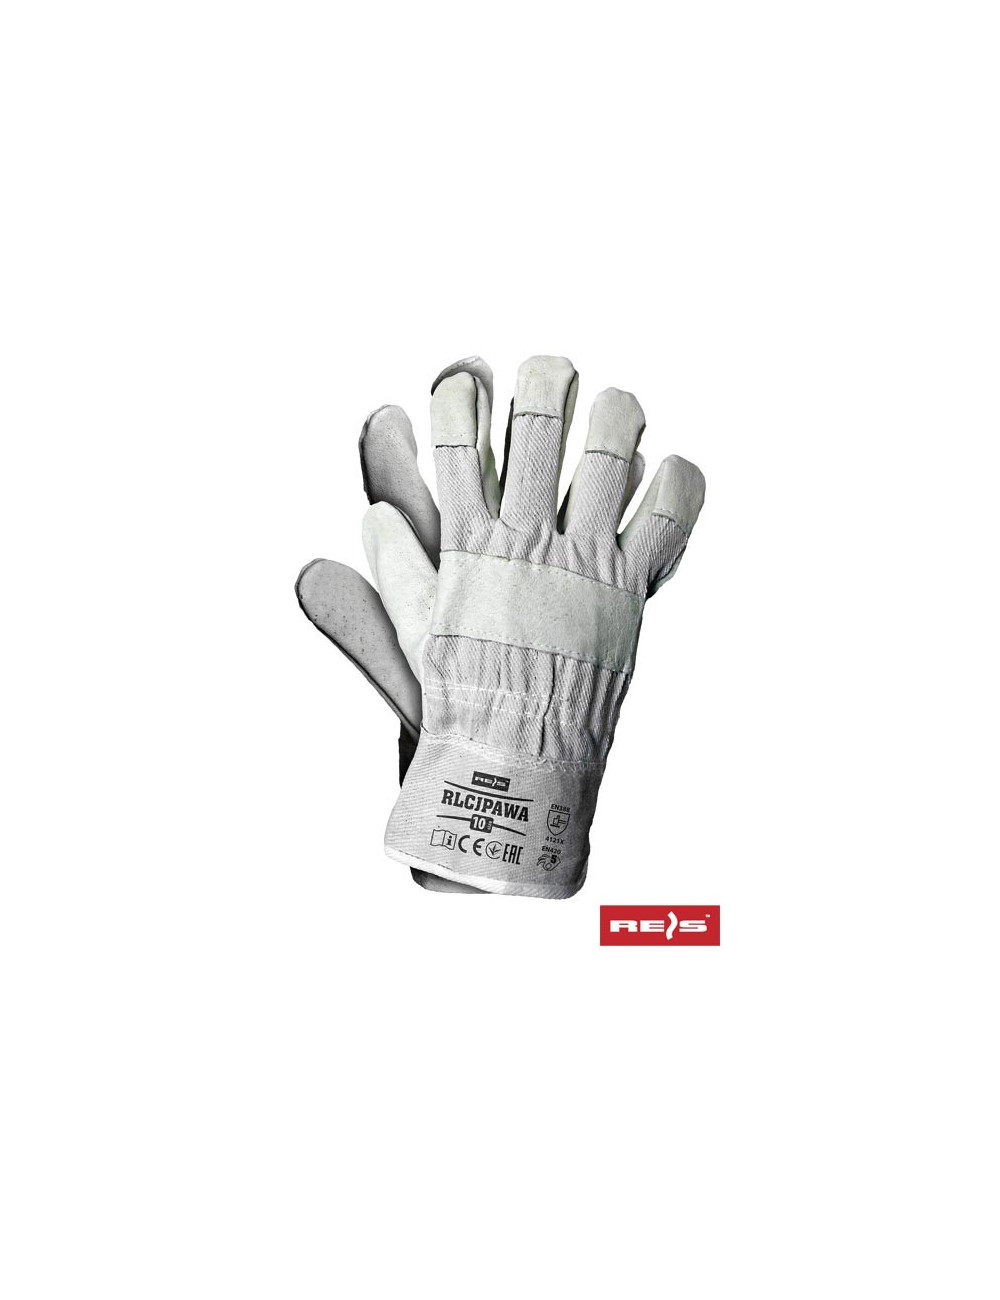 Protective gloves rlcjpawa beige-light color Reis